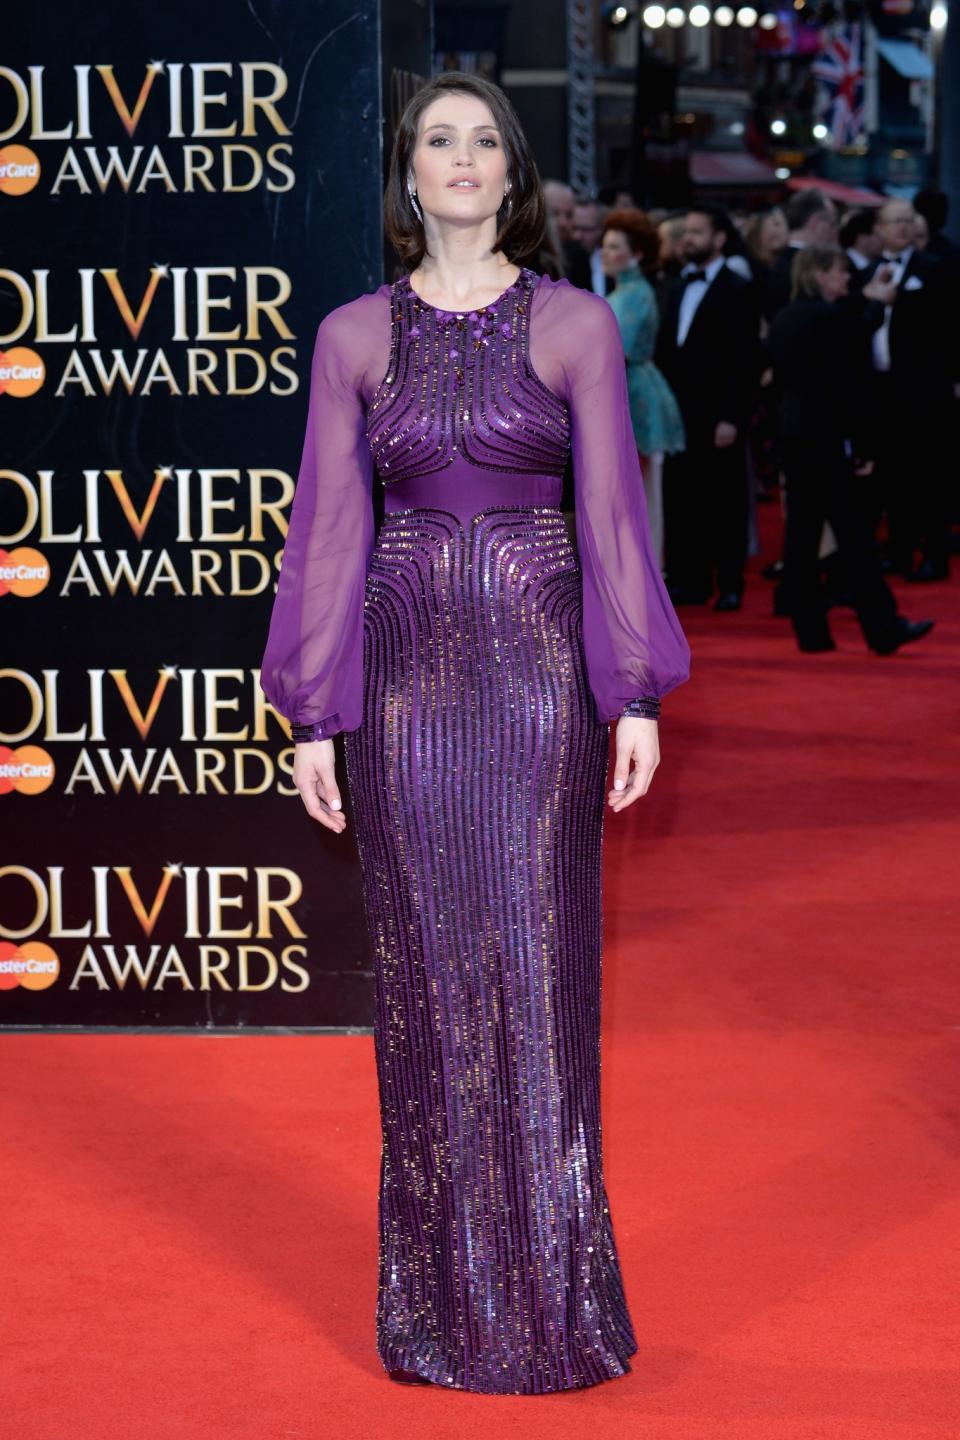 WORST: Gemma Arterton at the Olivier Awards